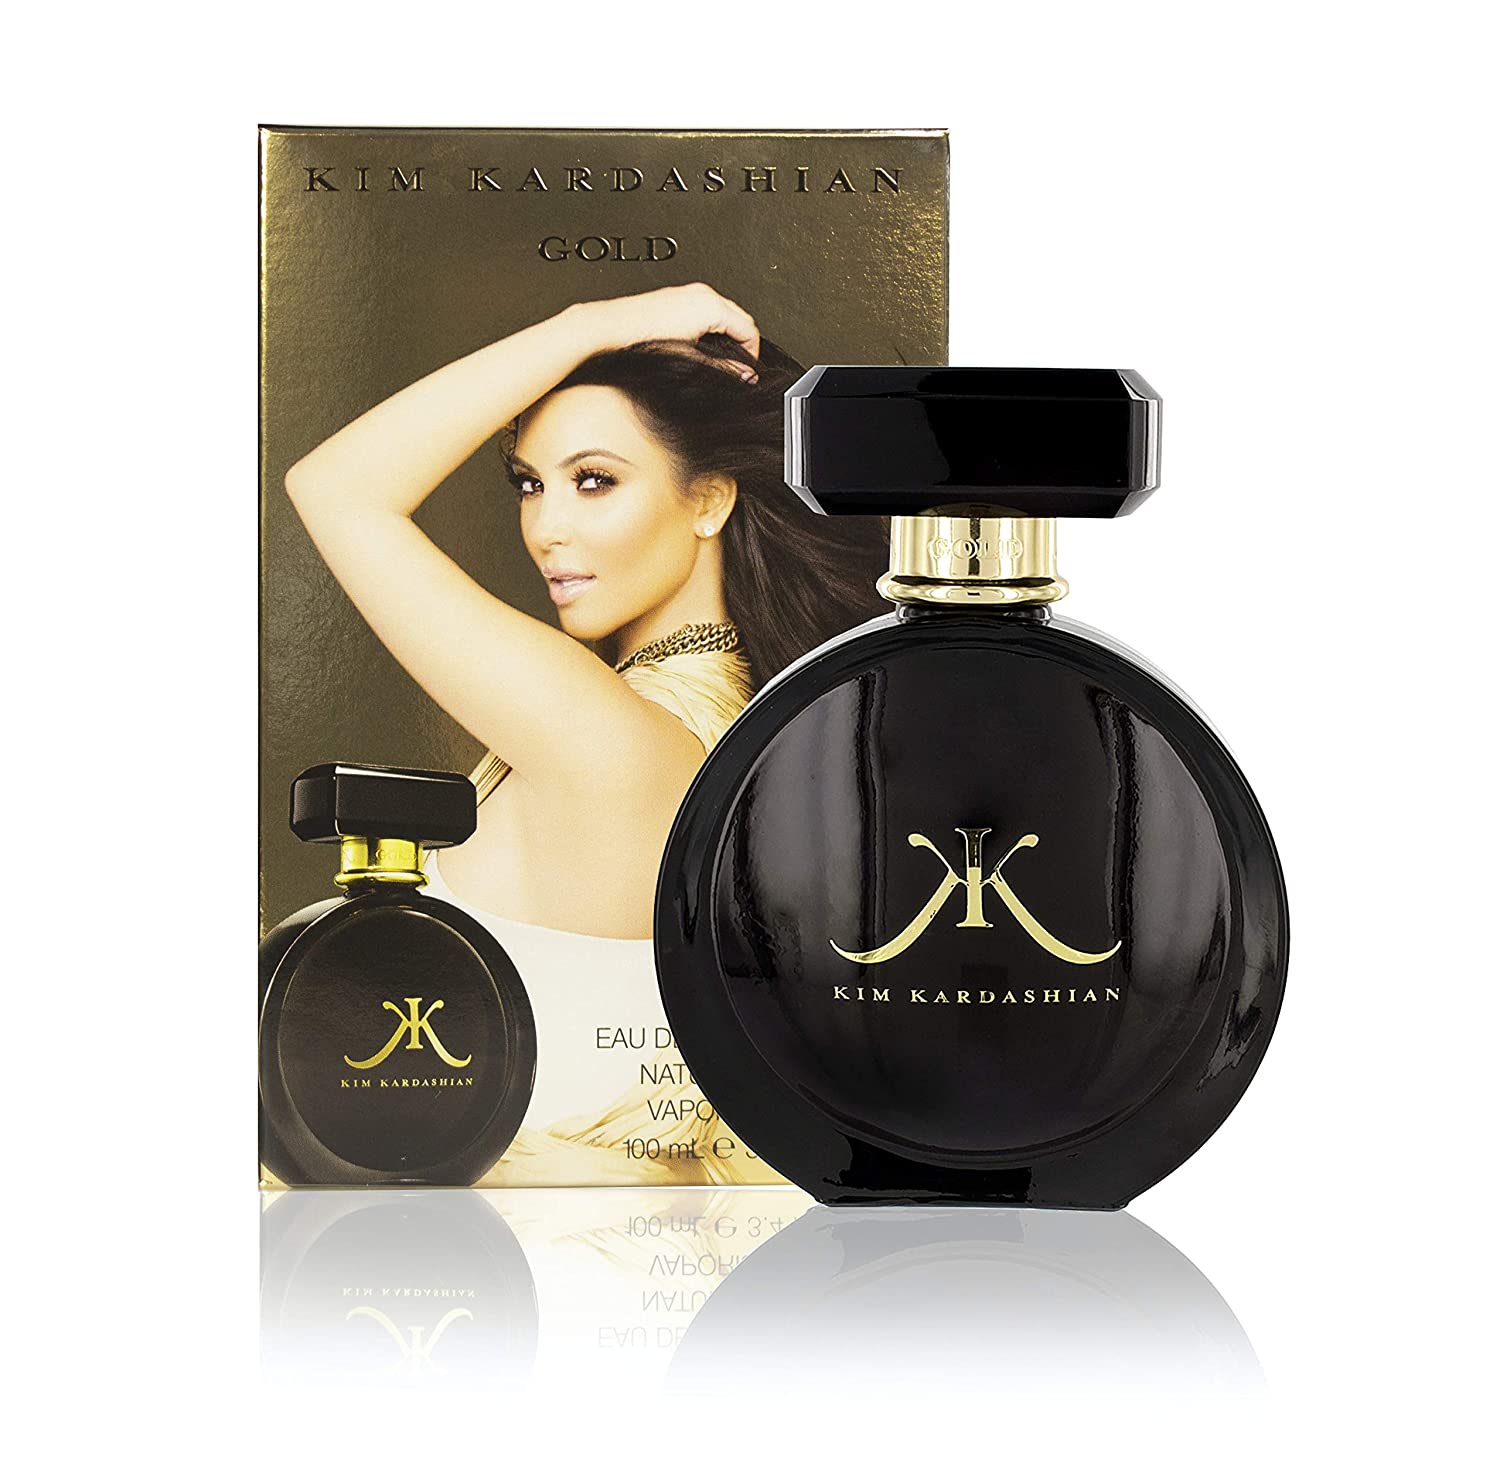 Kim Kardashian Gold Eau De Parfum Spray - 100 ml